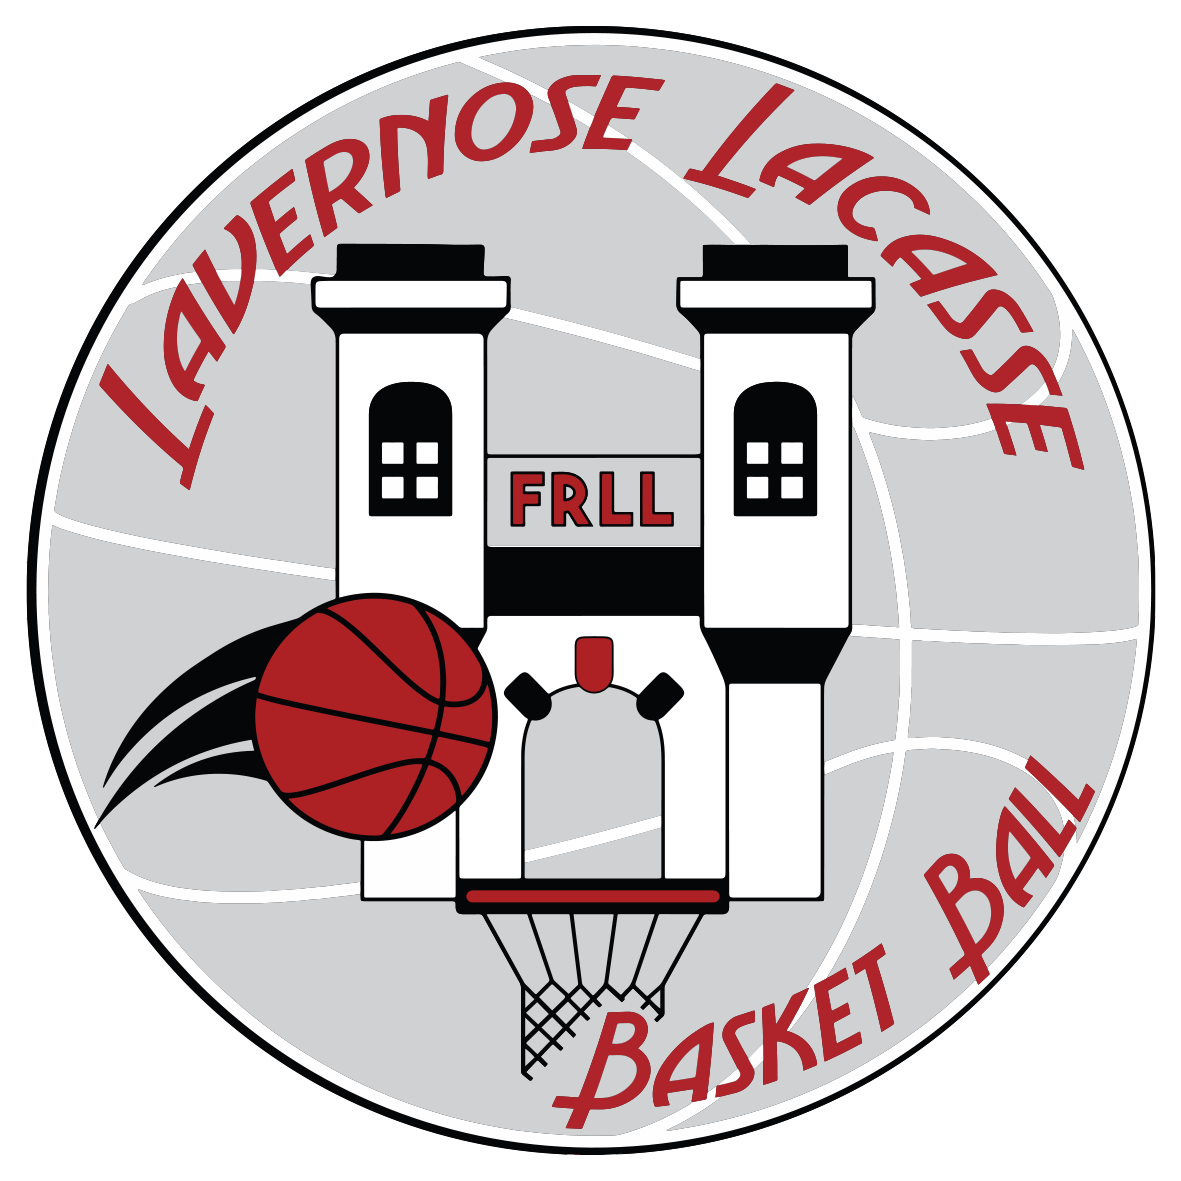 Lavernose Lacasse Basket-Ball